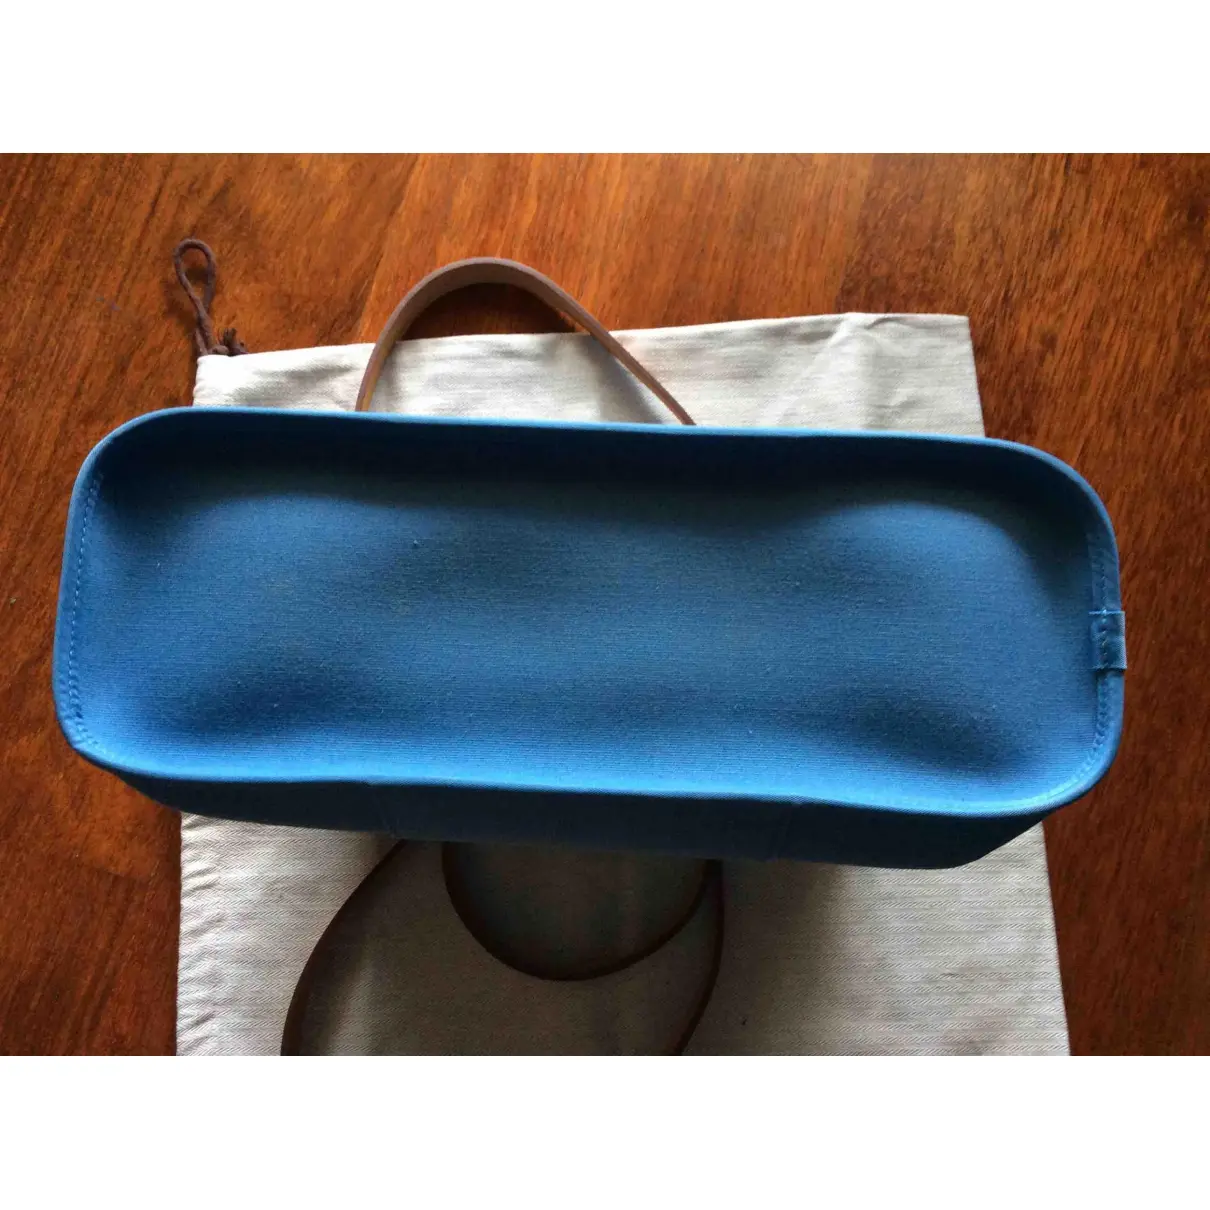 Buy Hermès Cabag cloth handbag online